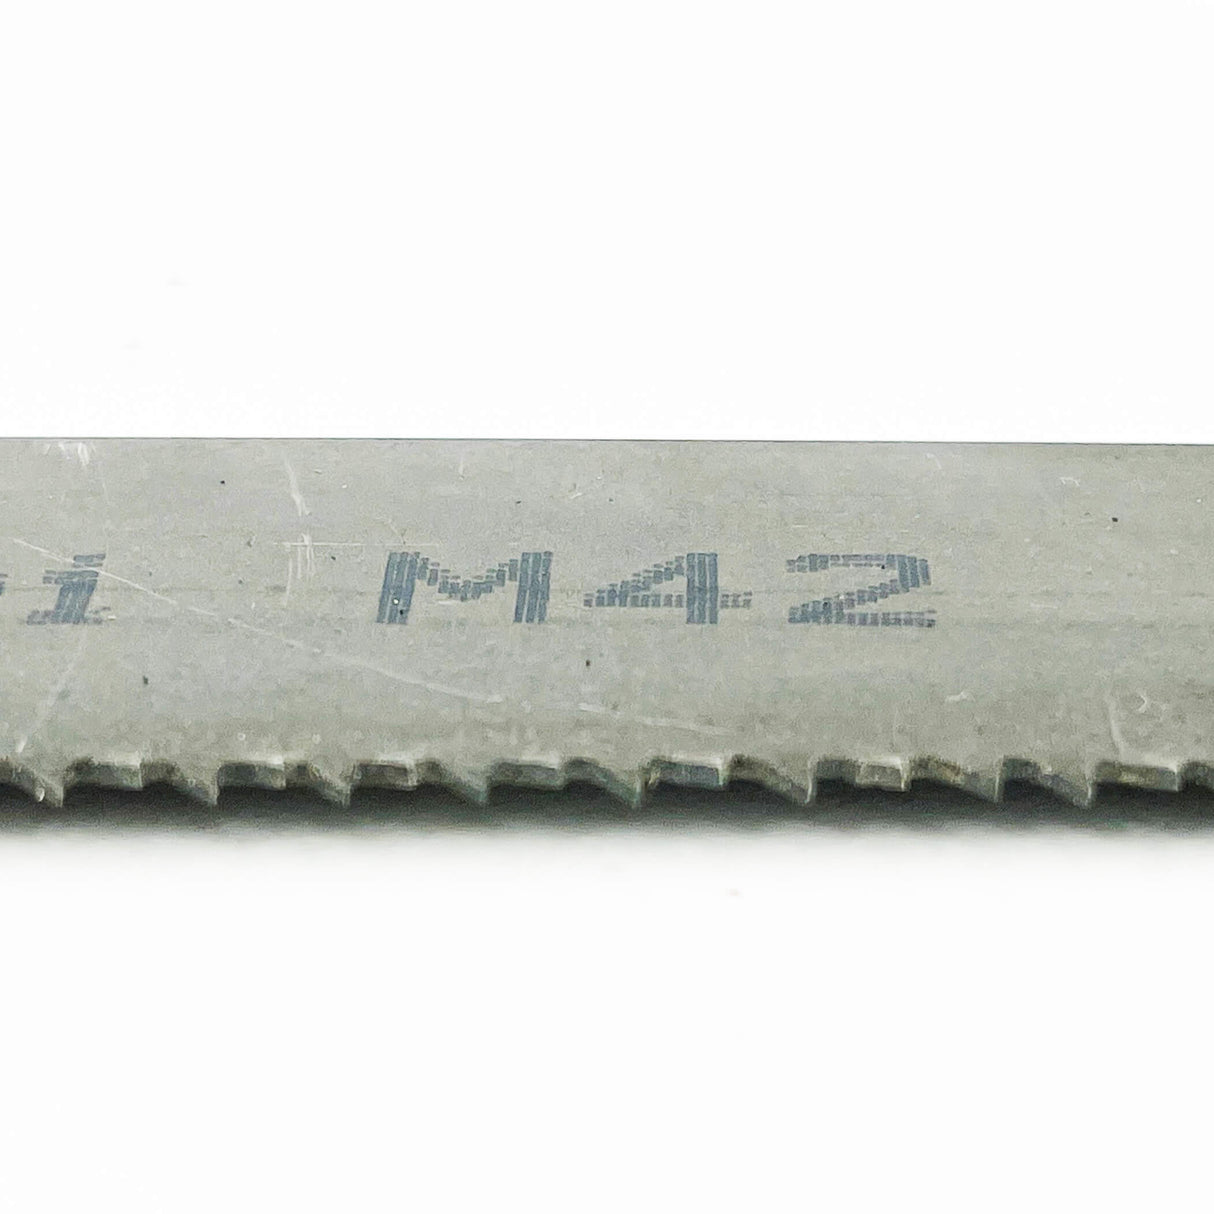 4880mm Long x 13mm Wide COBALT M42 Bi-Metal Band Saw - Pack of 2 Blades